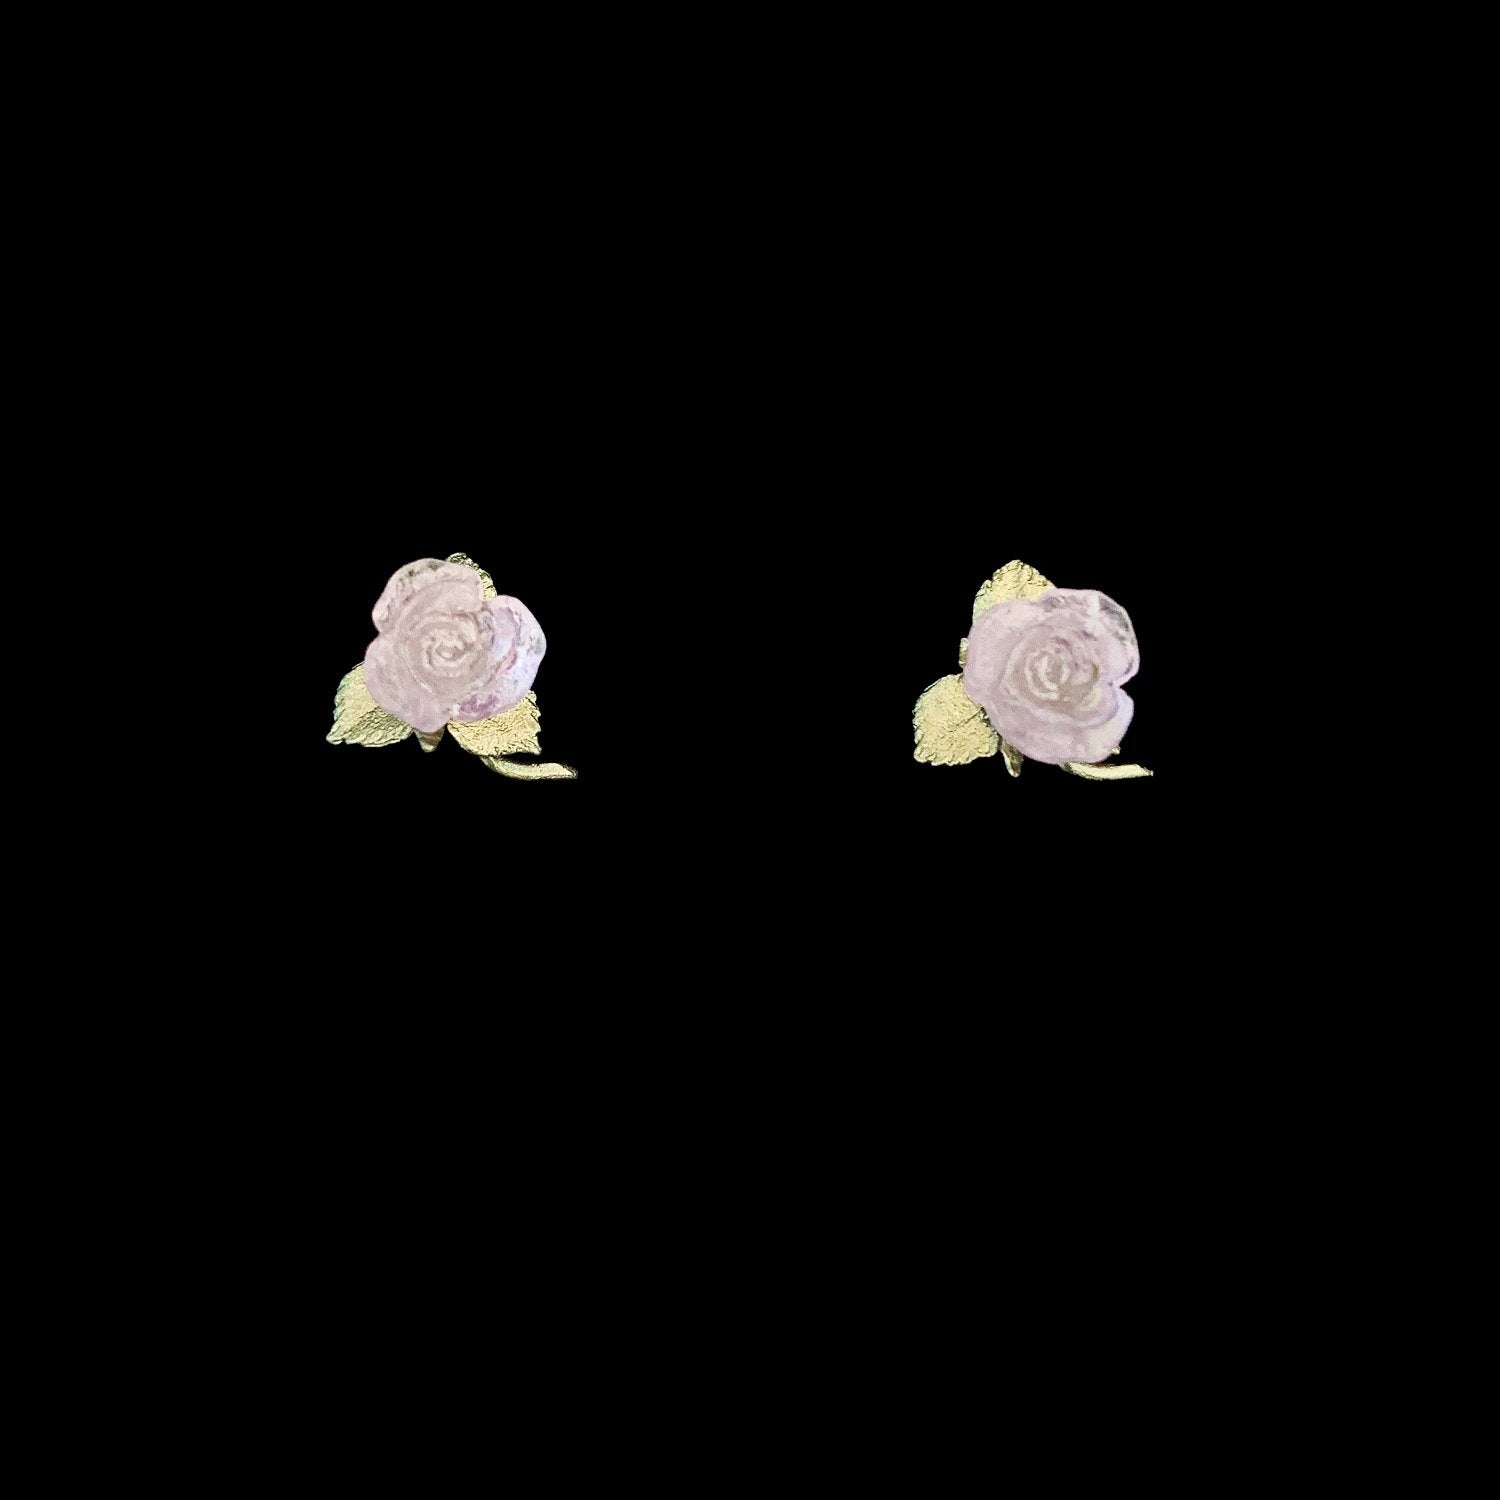 Blushing Rose Earrings - Petite Post